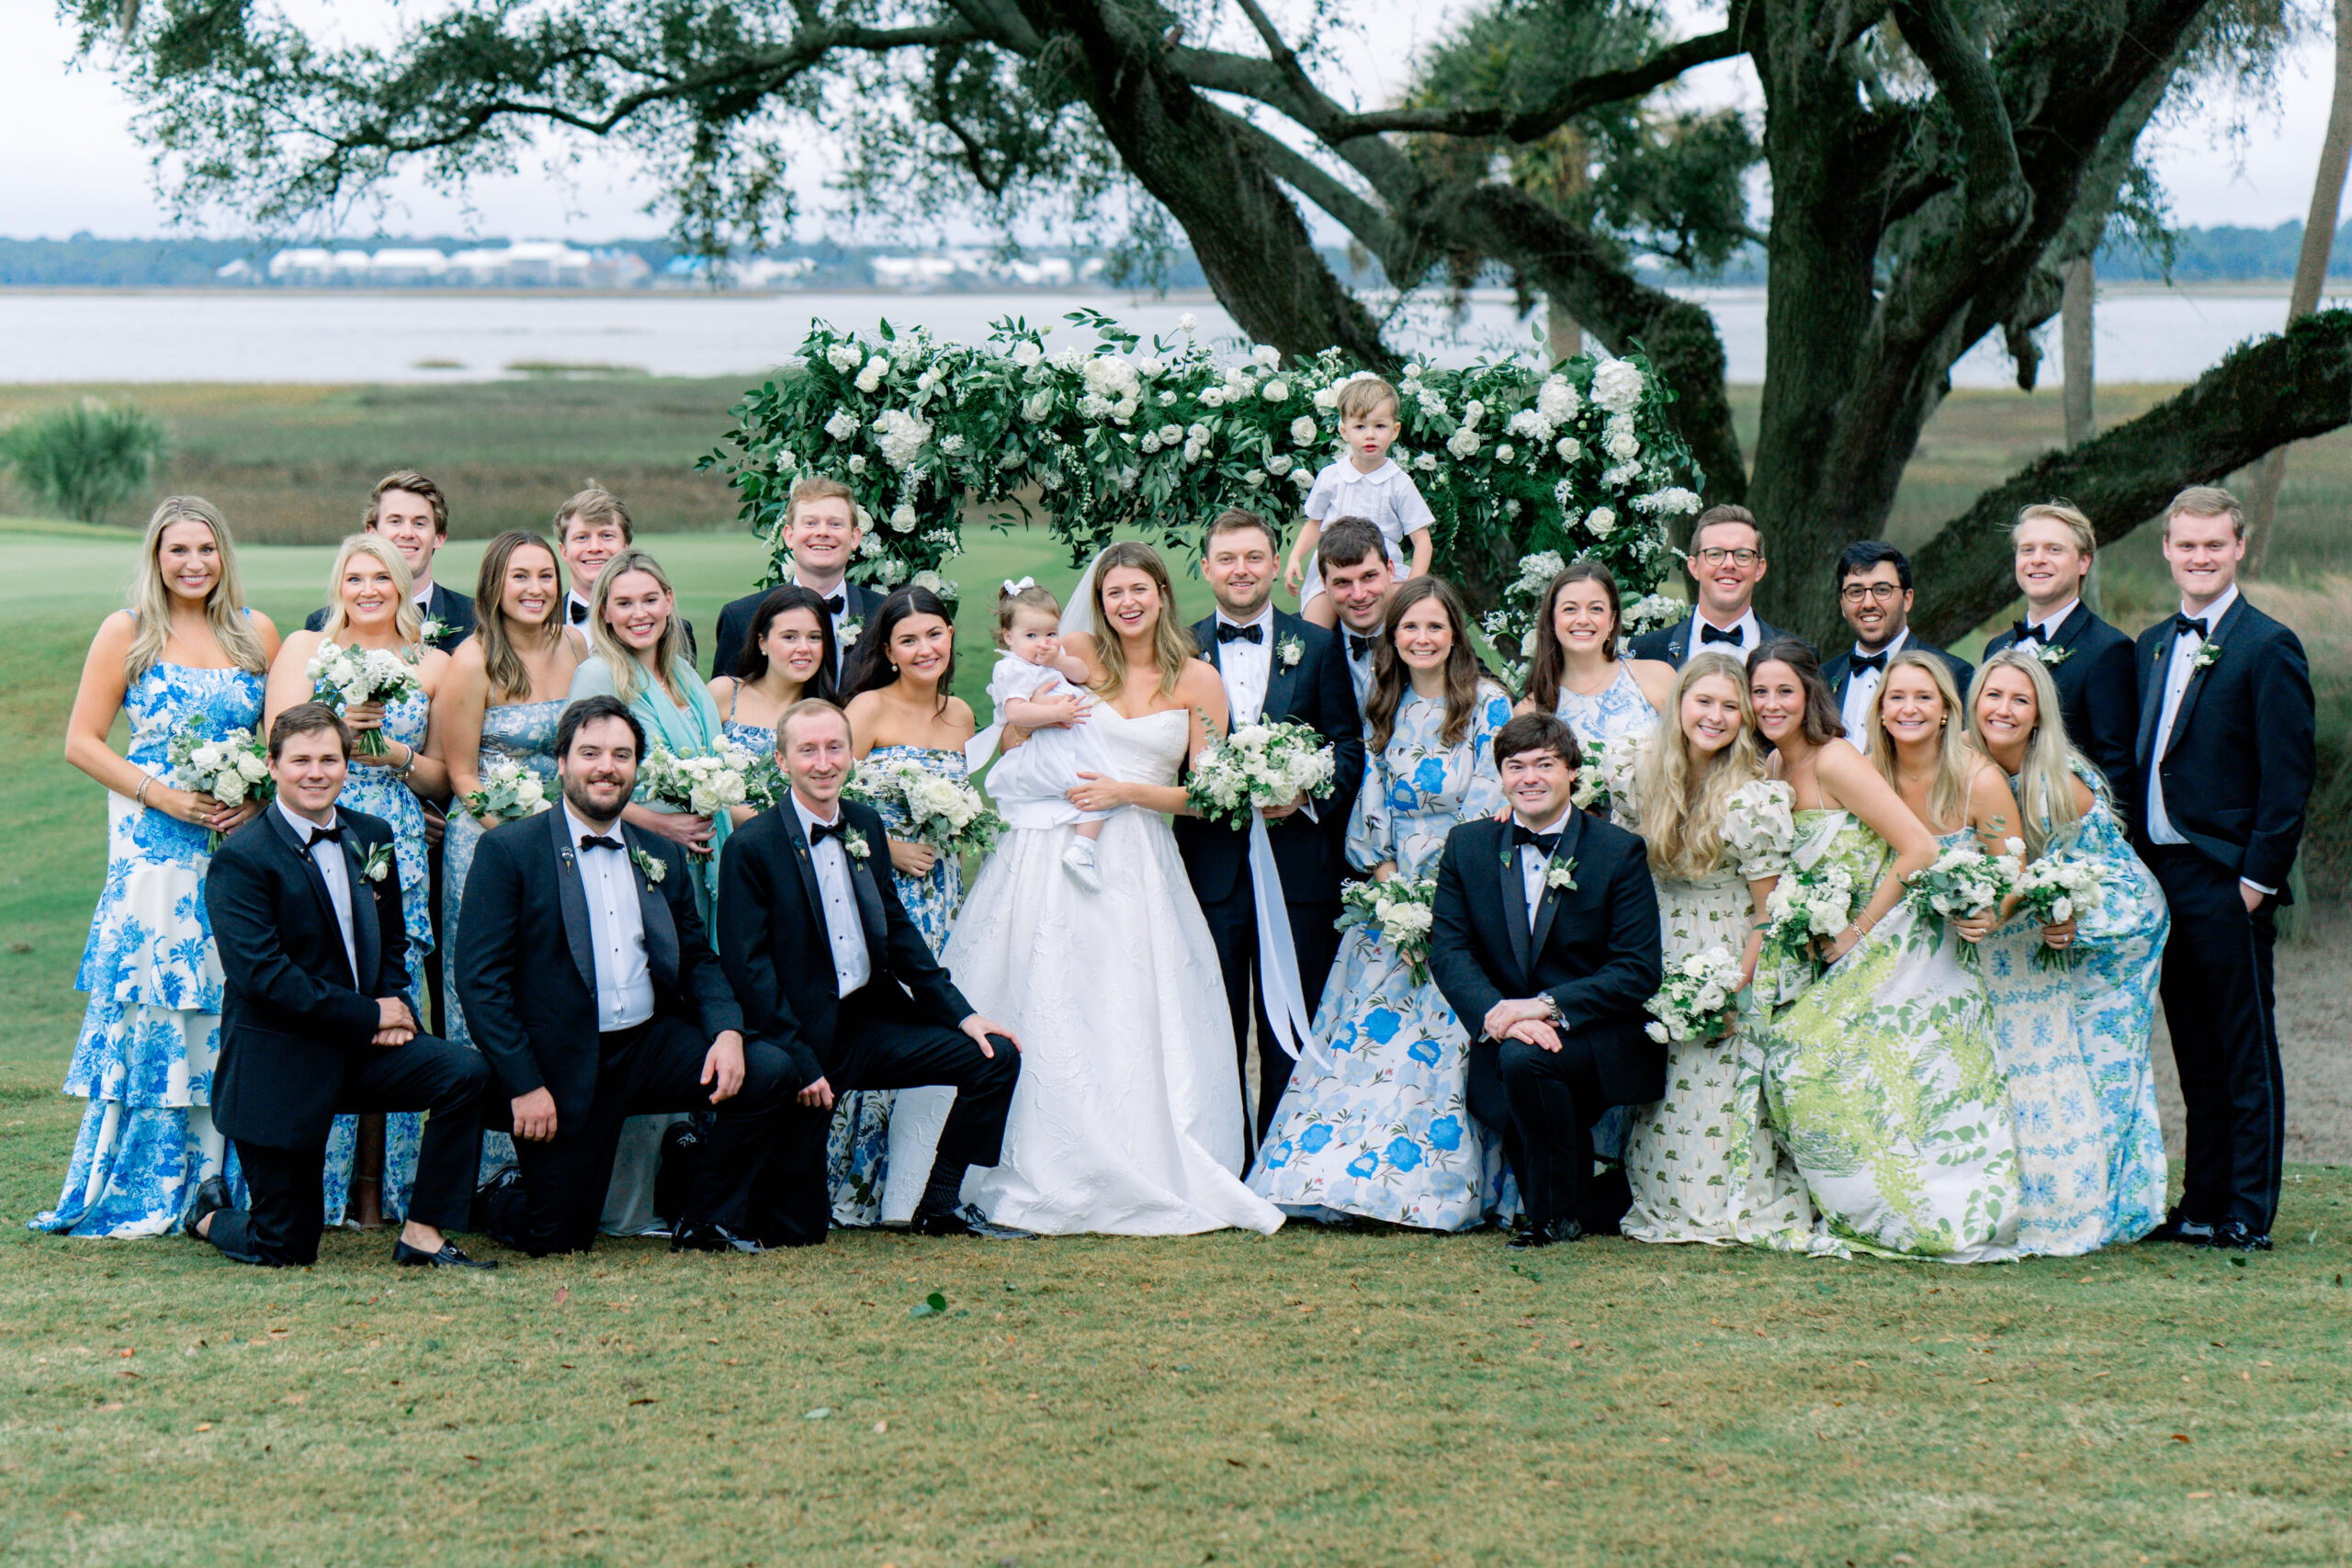 Full bridal party big group photo. 